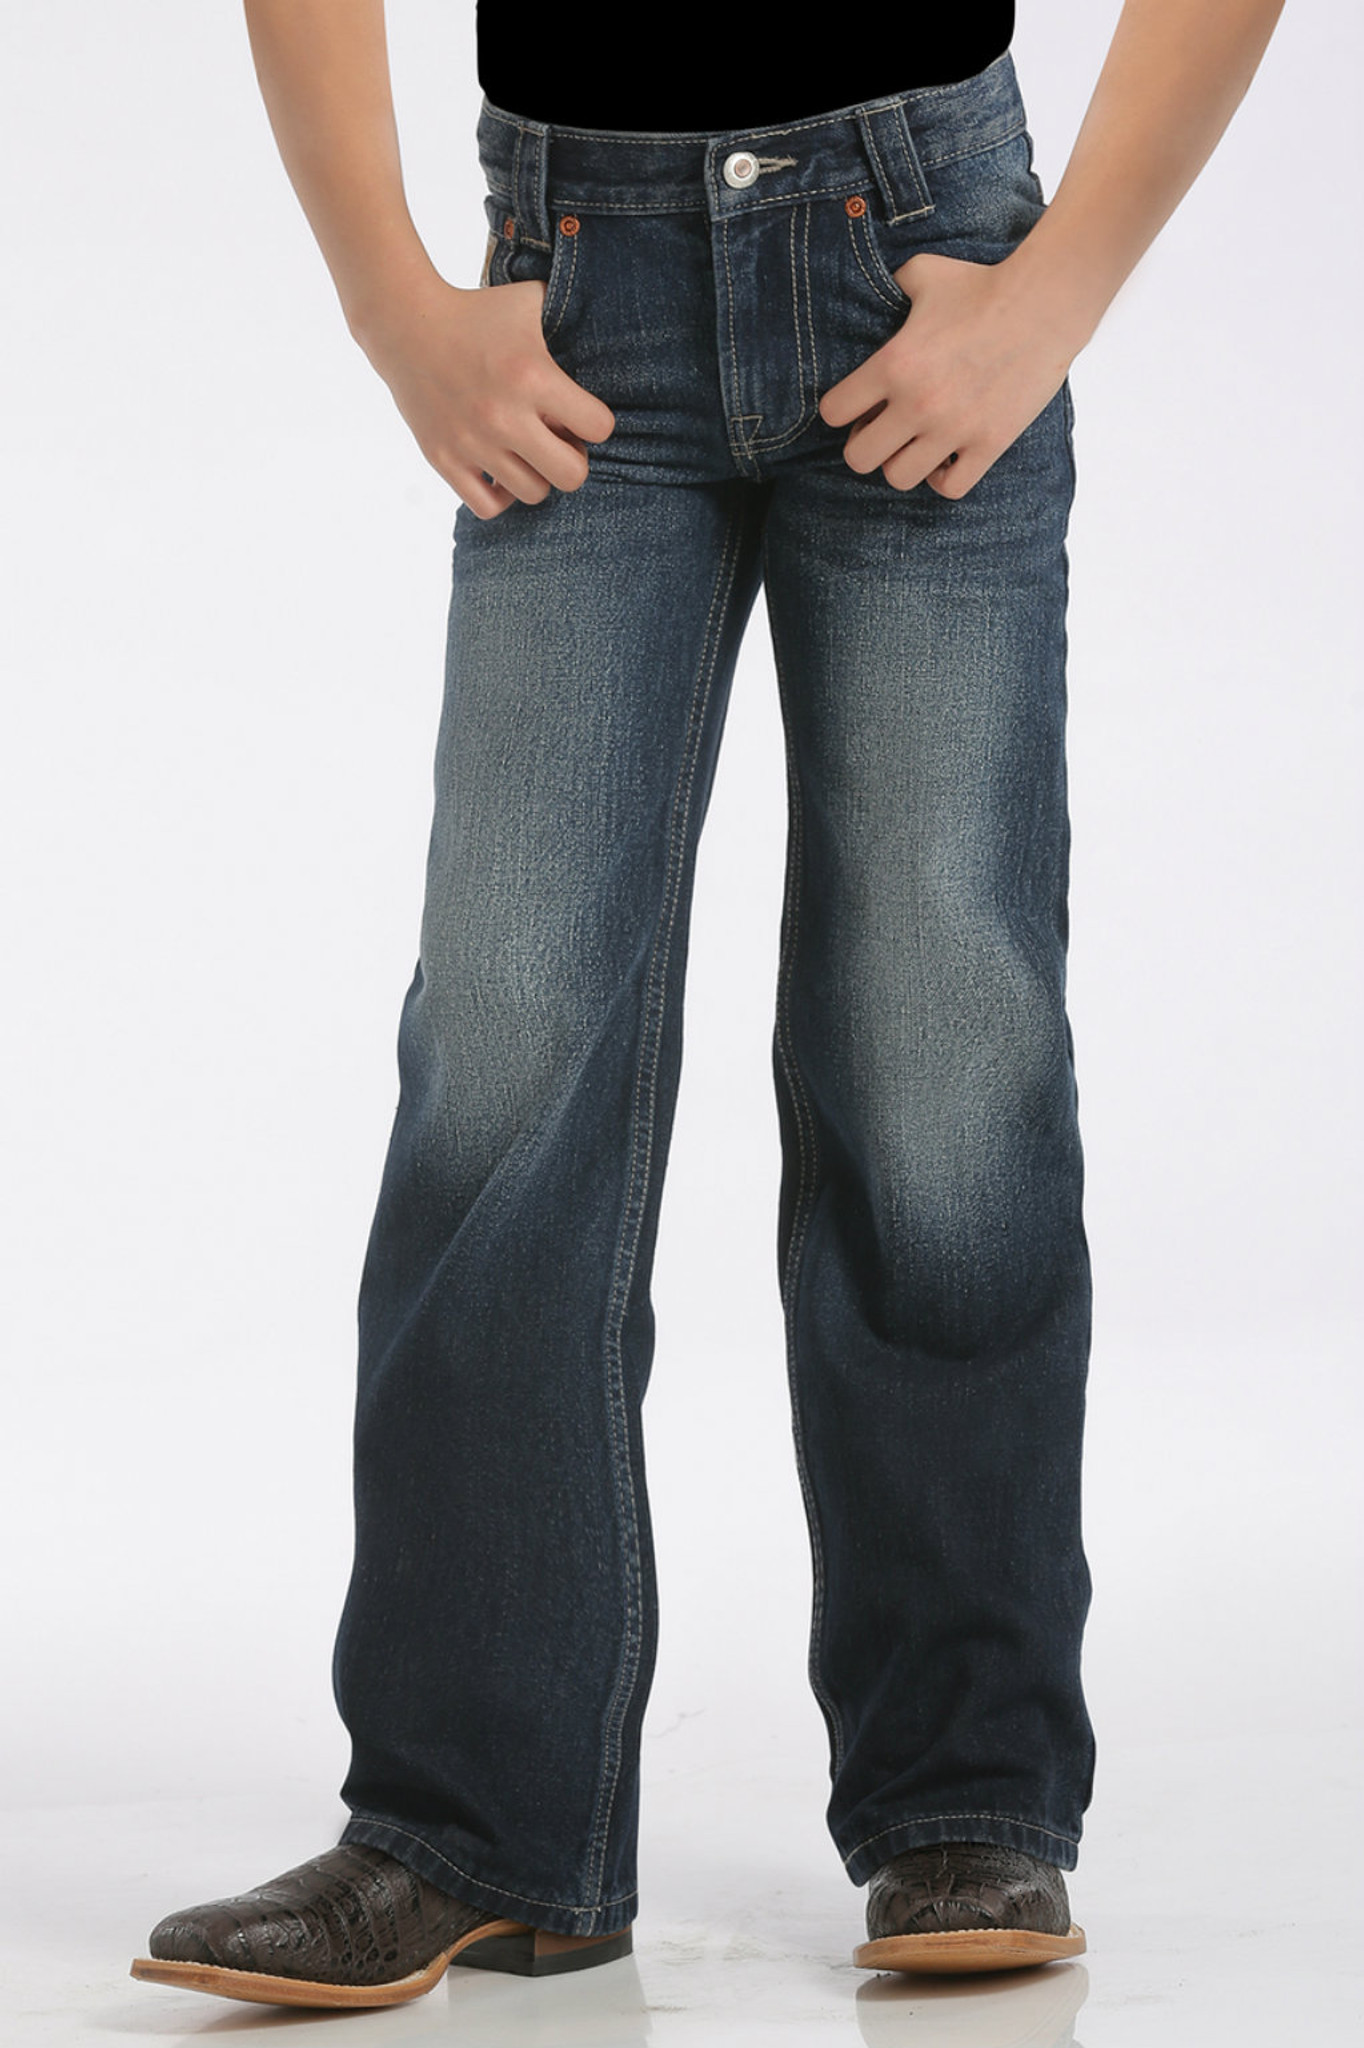 cinch carter 2.0 jeans